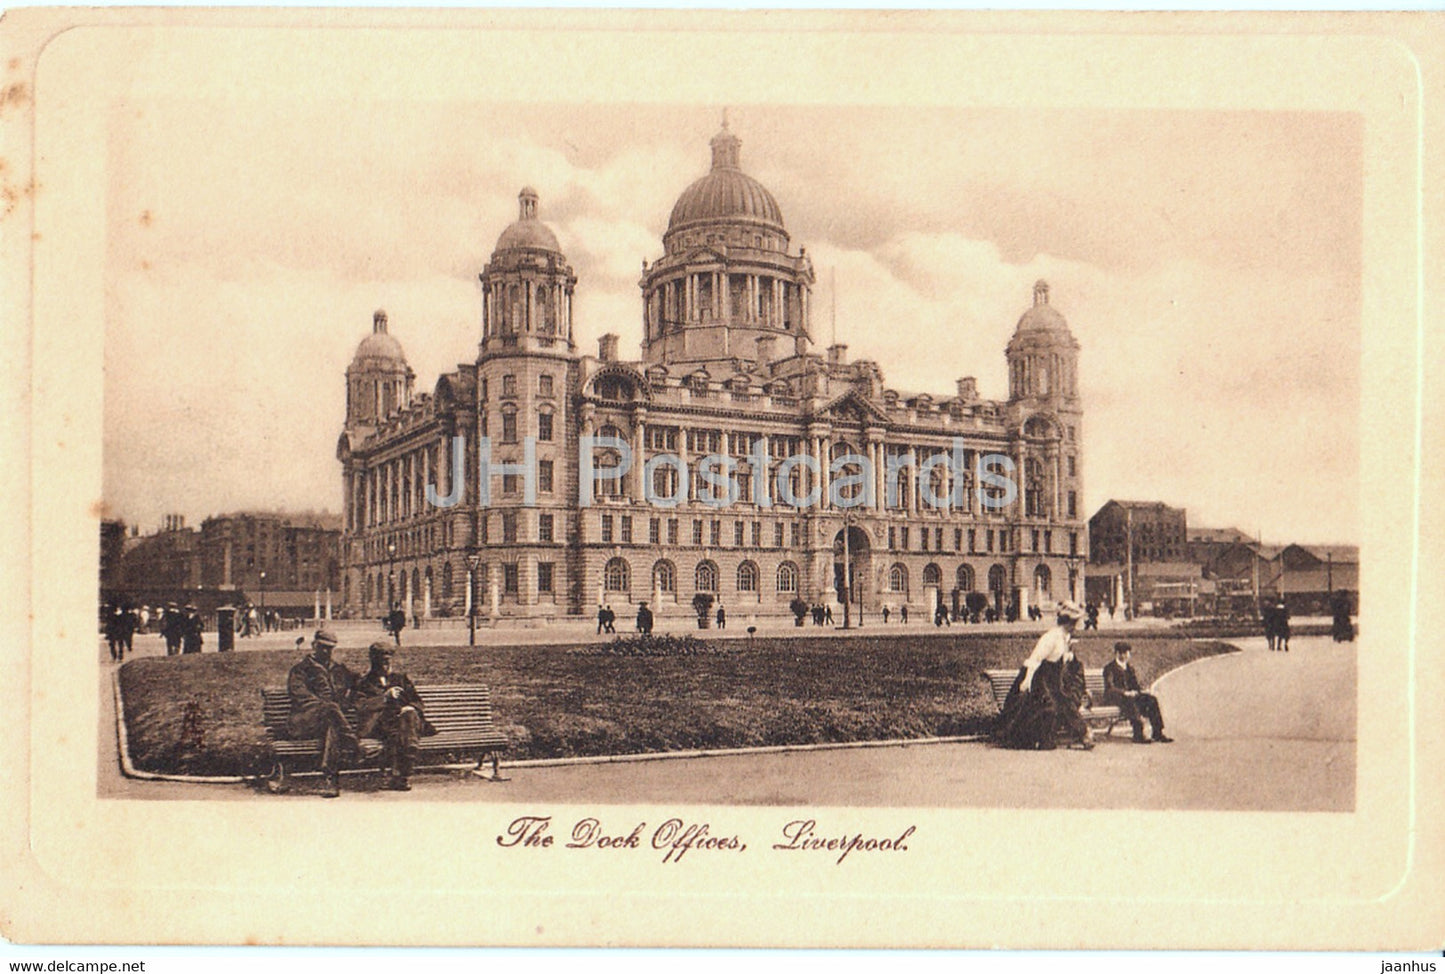 Liverpool - The Dock Offices - 2455 - old postcard - England - United Kingdom - unused - JH Postcards